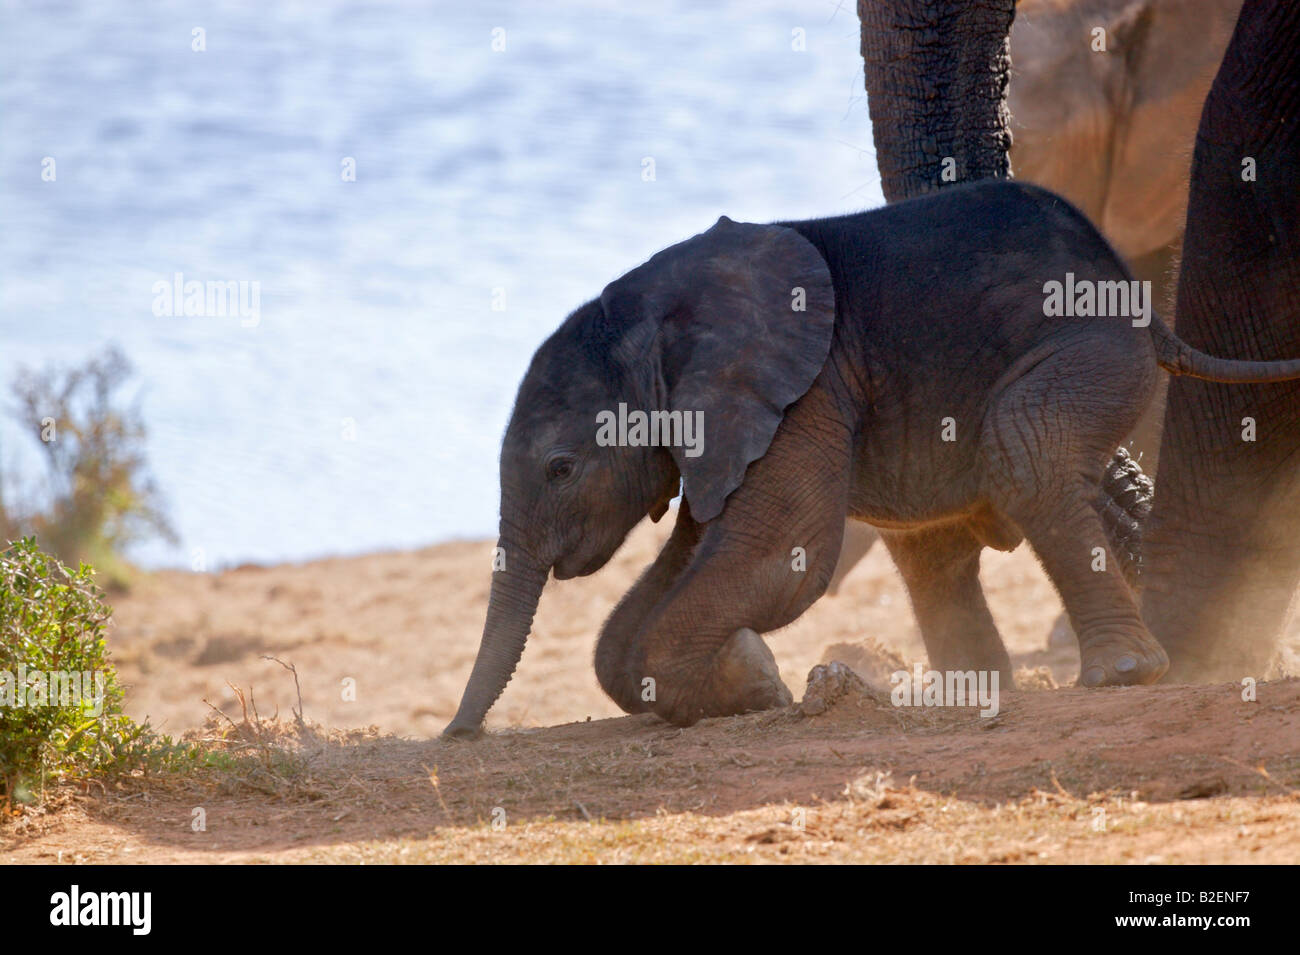 A baby elephant kneeling down Stock Photo